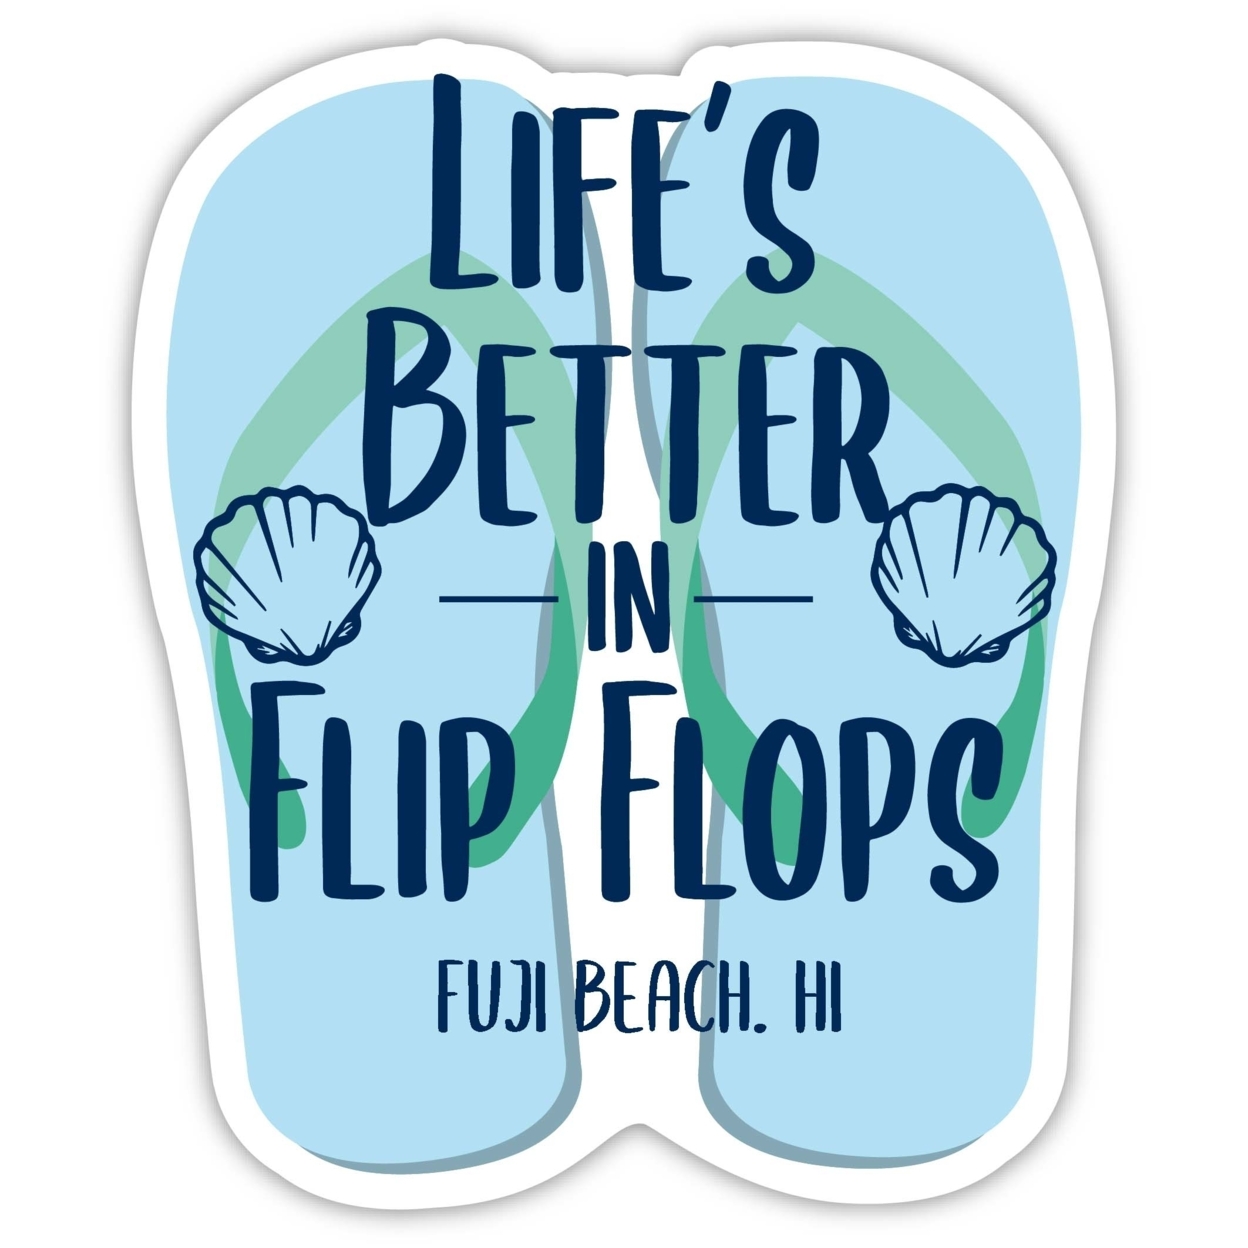 Fuji Beach Hawaii Souvenir 4 Inch Vinyl Decal Sticker Flip Flop Design